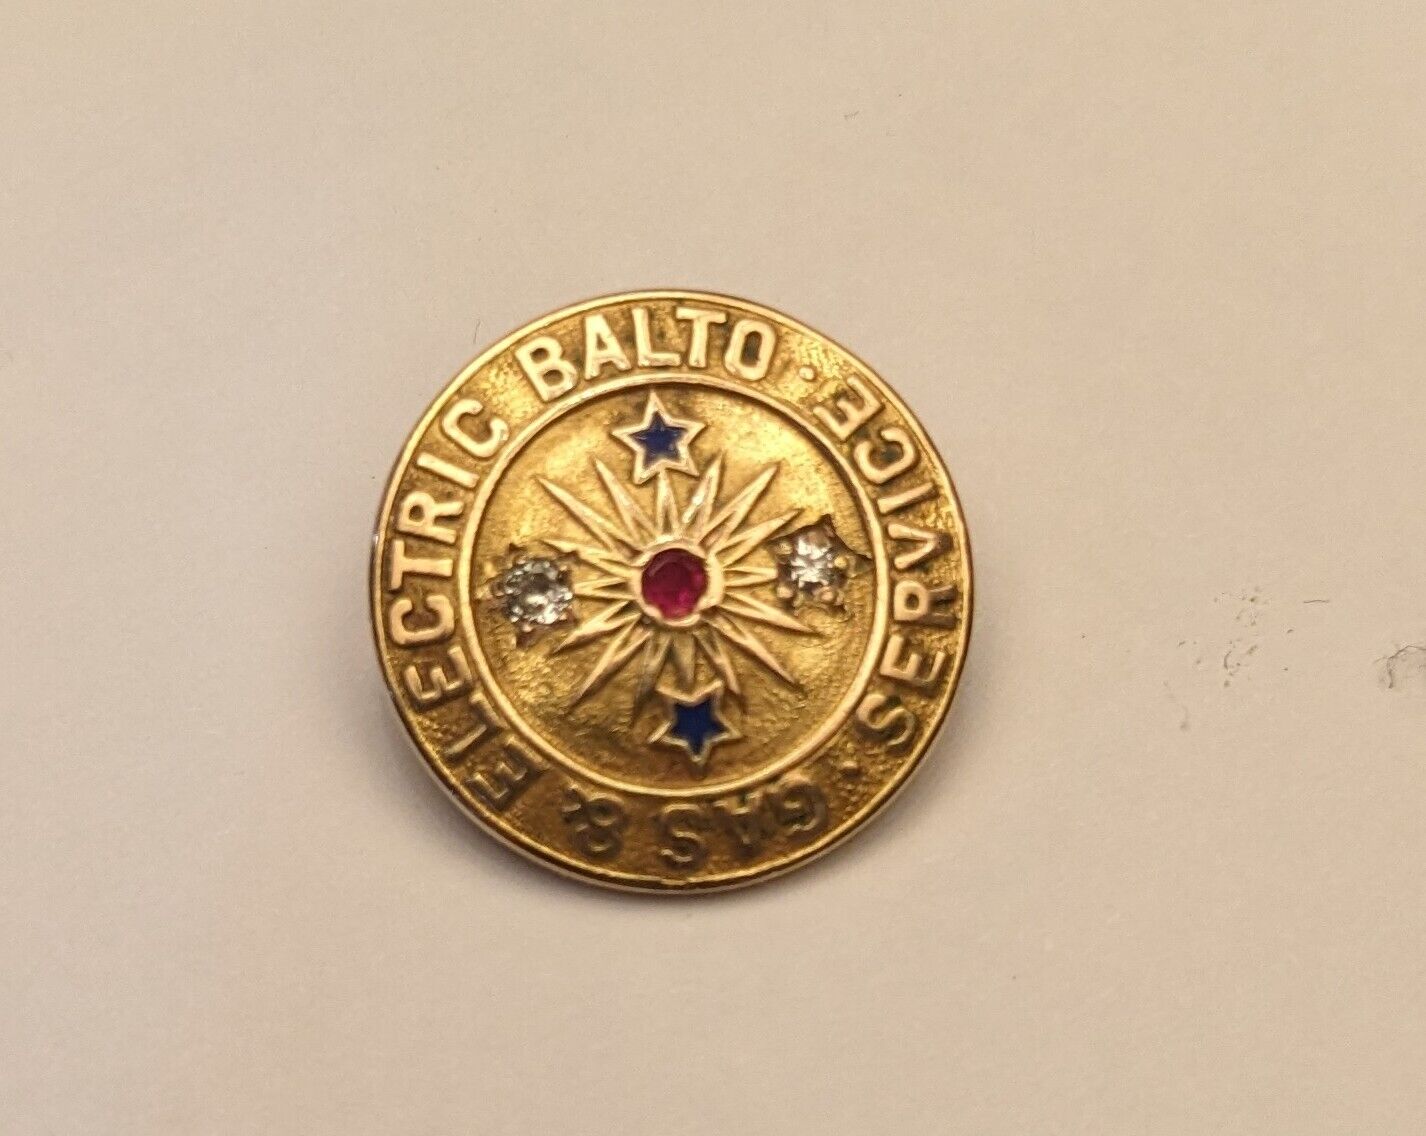 10K Yellow Gold BGE Service Pin 2.87g Jewelry Gas & Electric Balto Award Button